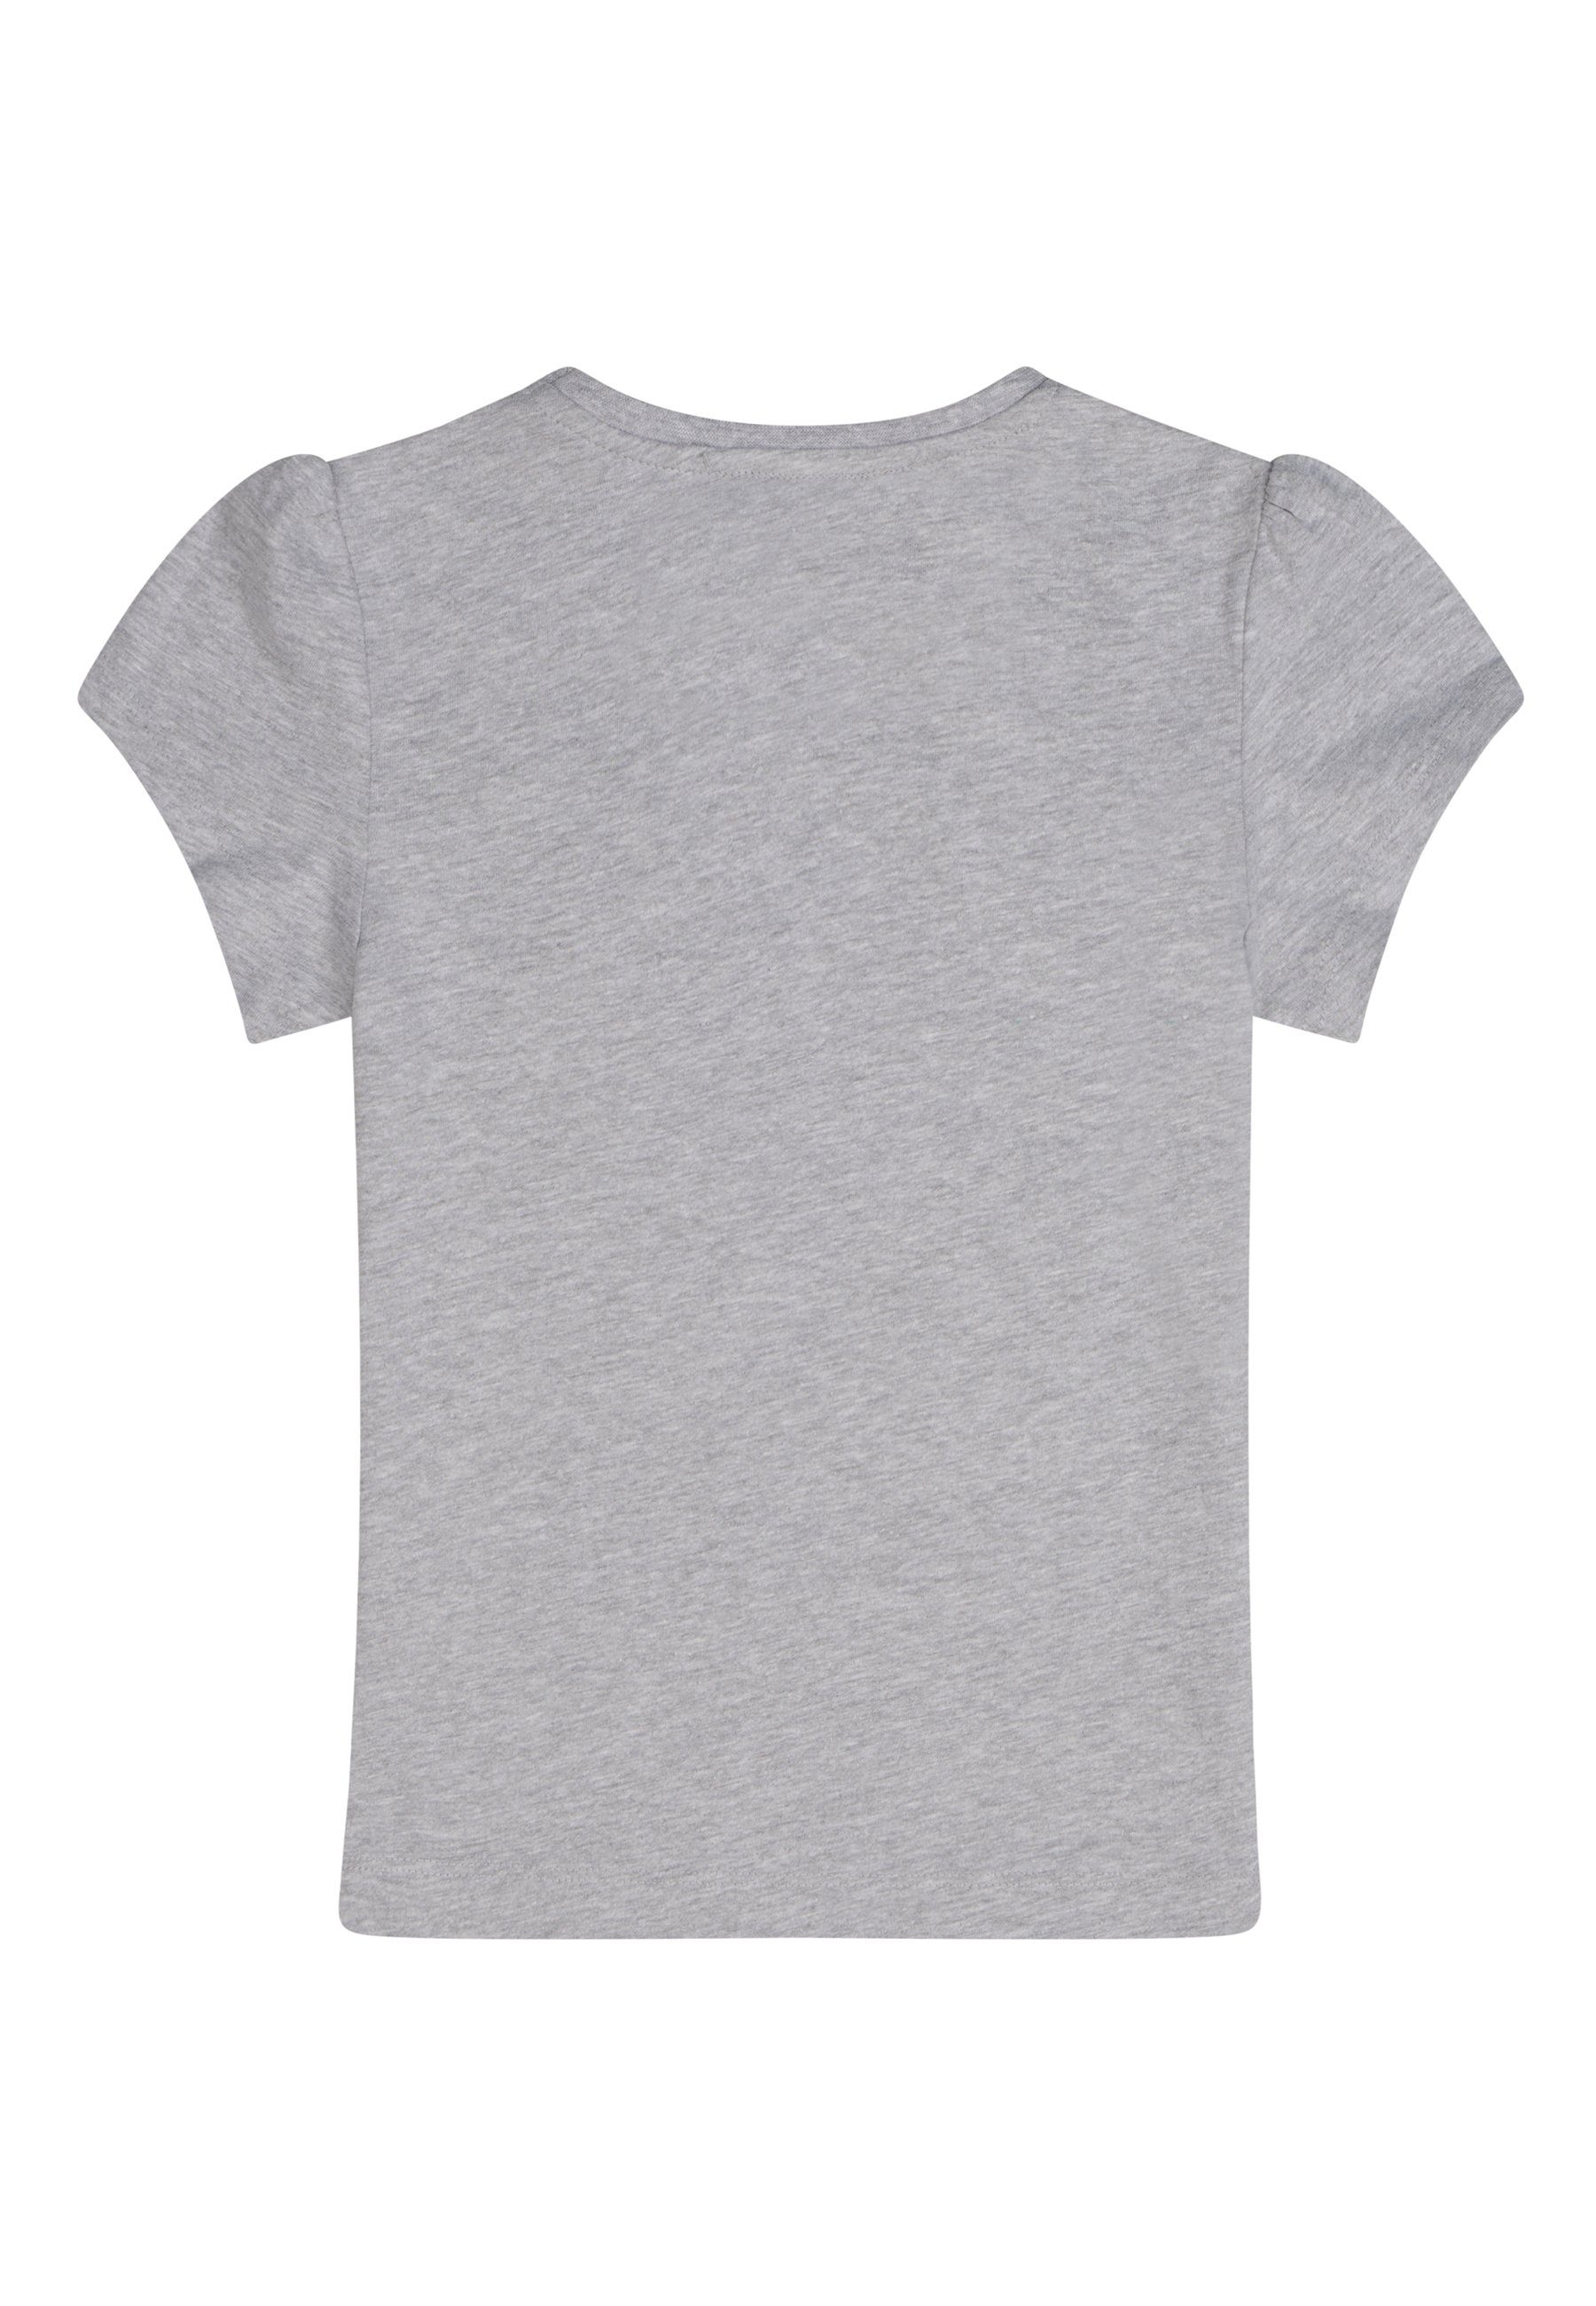 Skye Kinder Mädchen kurzarm-Shirt Oberteil PAW PATROL T-Shirt